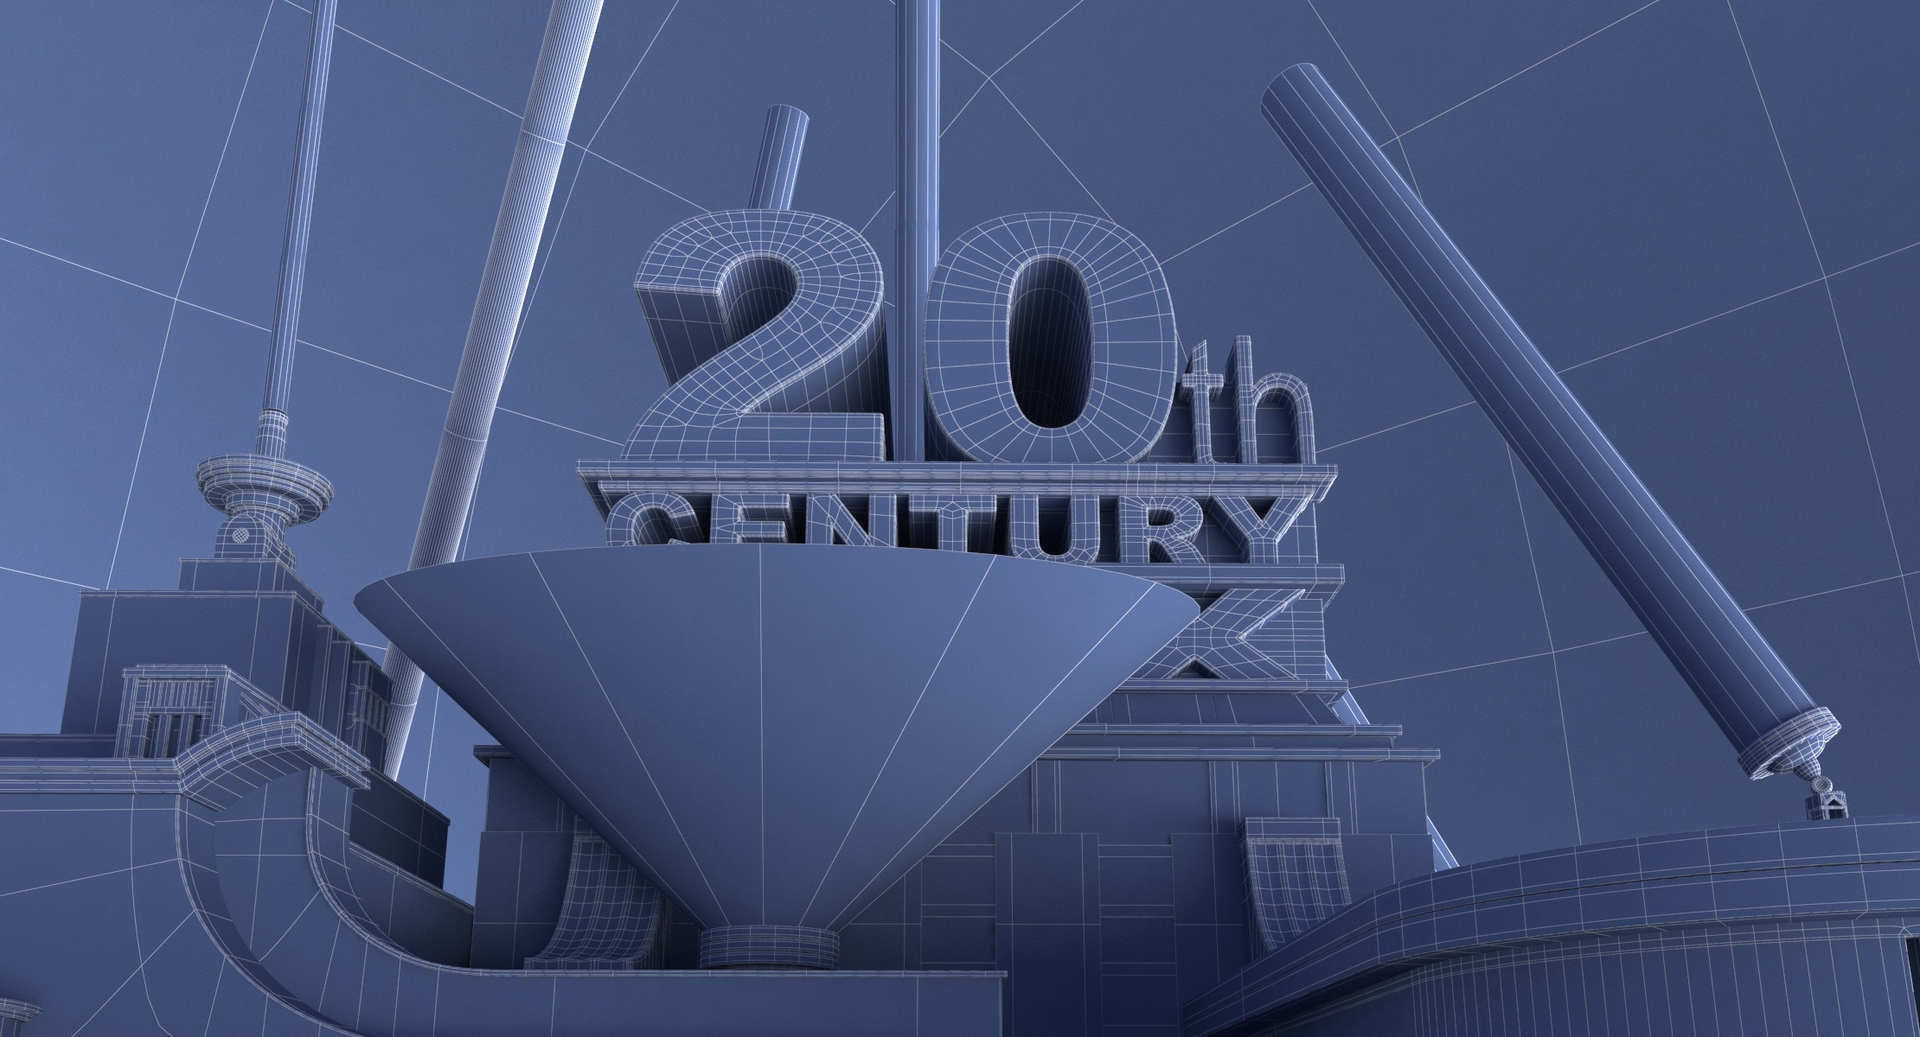 3D model 20th century fox animation TurboSquid 1621552